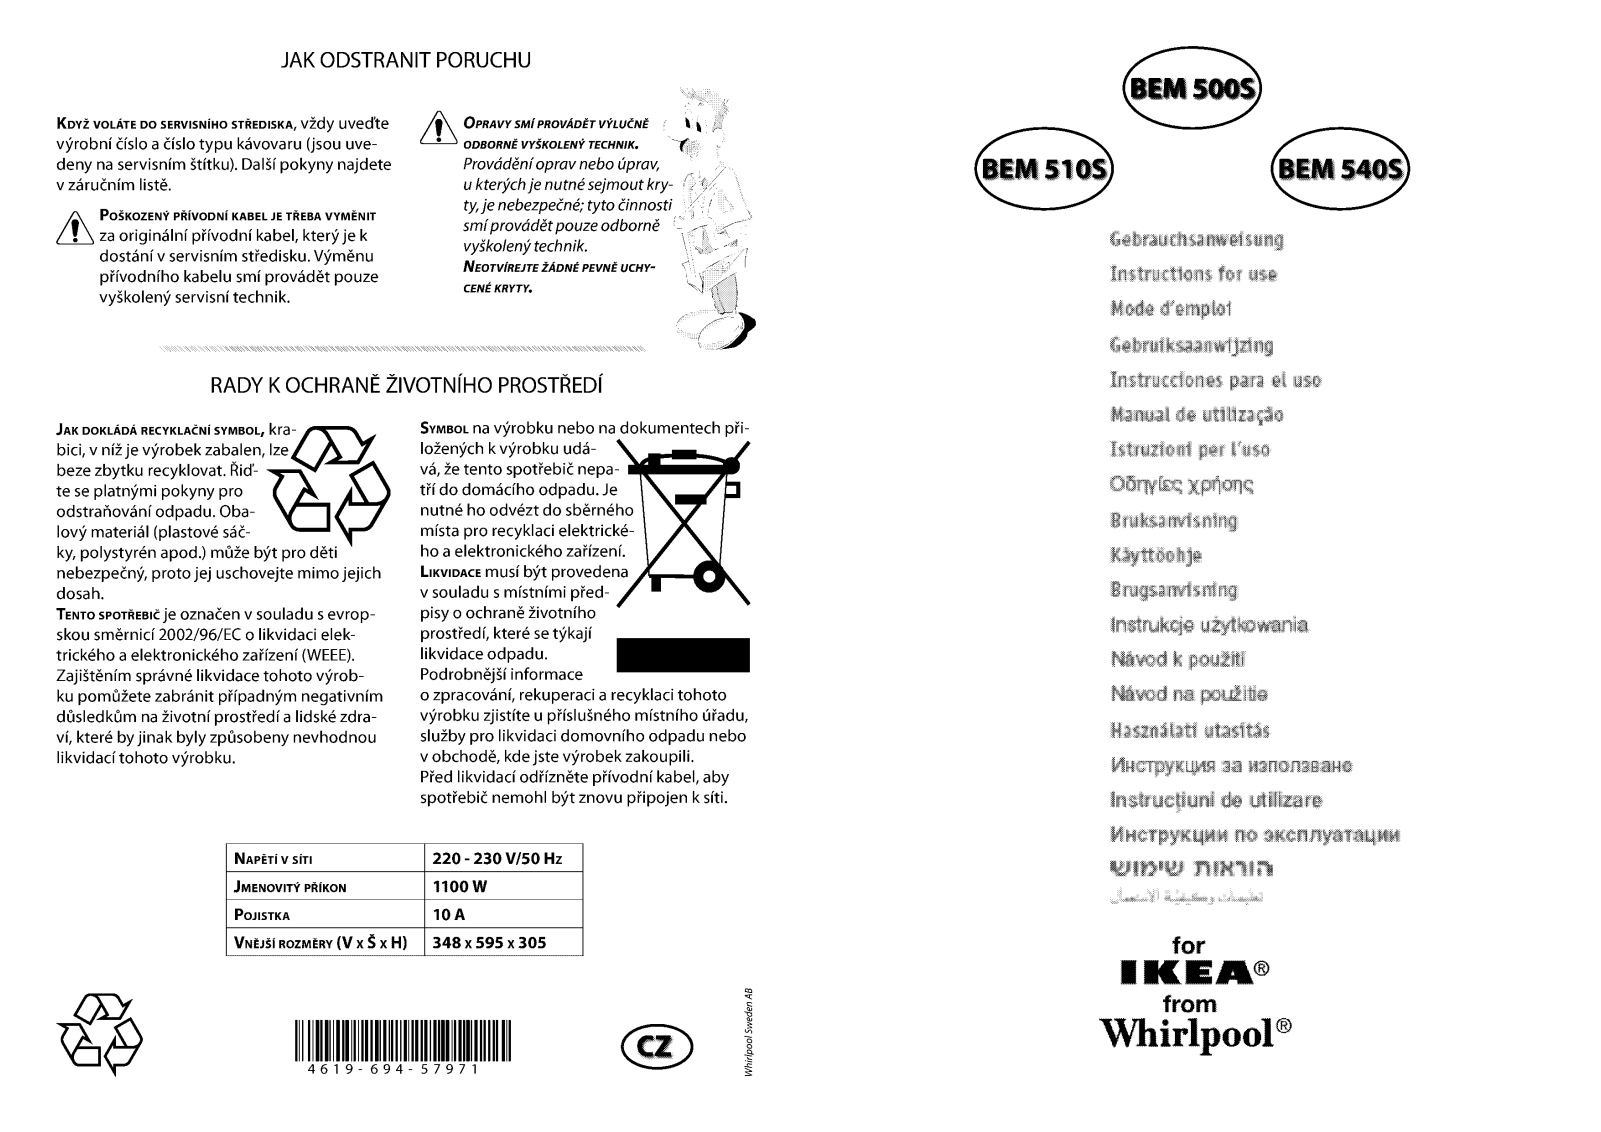 IKEA BEM 510S User Manual